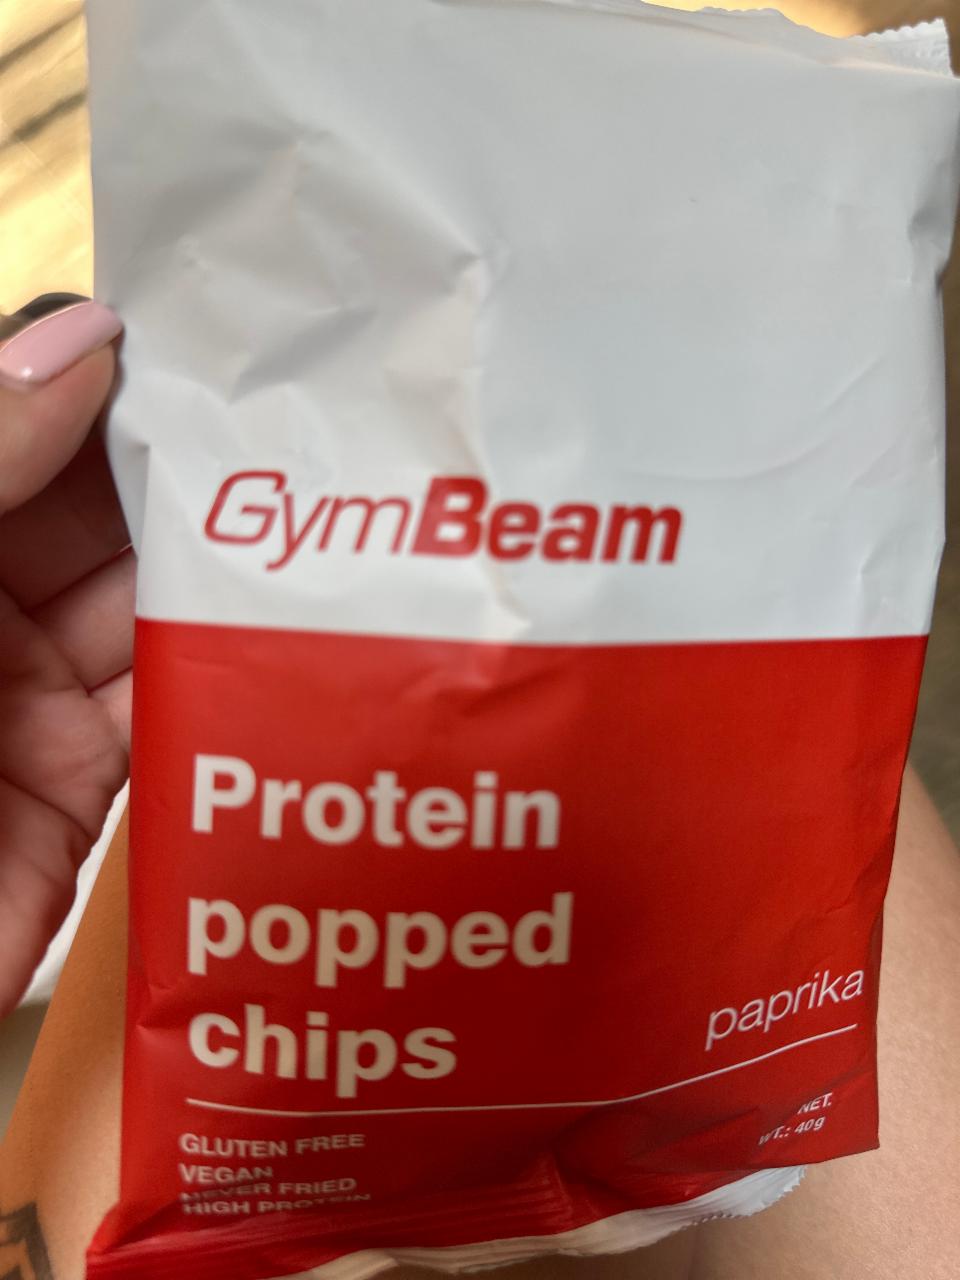 Фото - Протеиновые чипсы Protein popped chips Paprika GymBeam